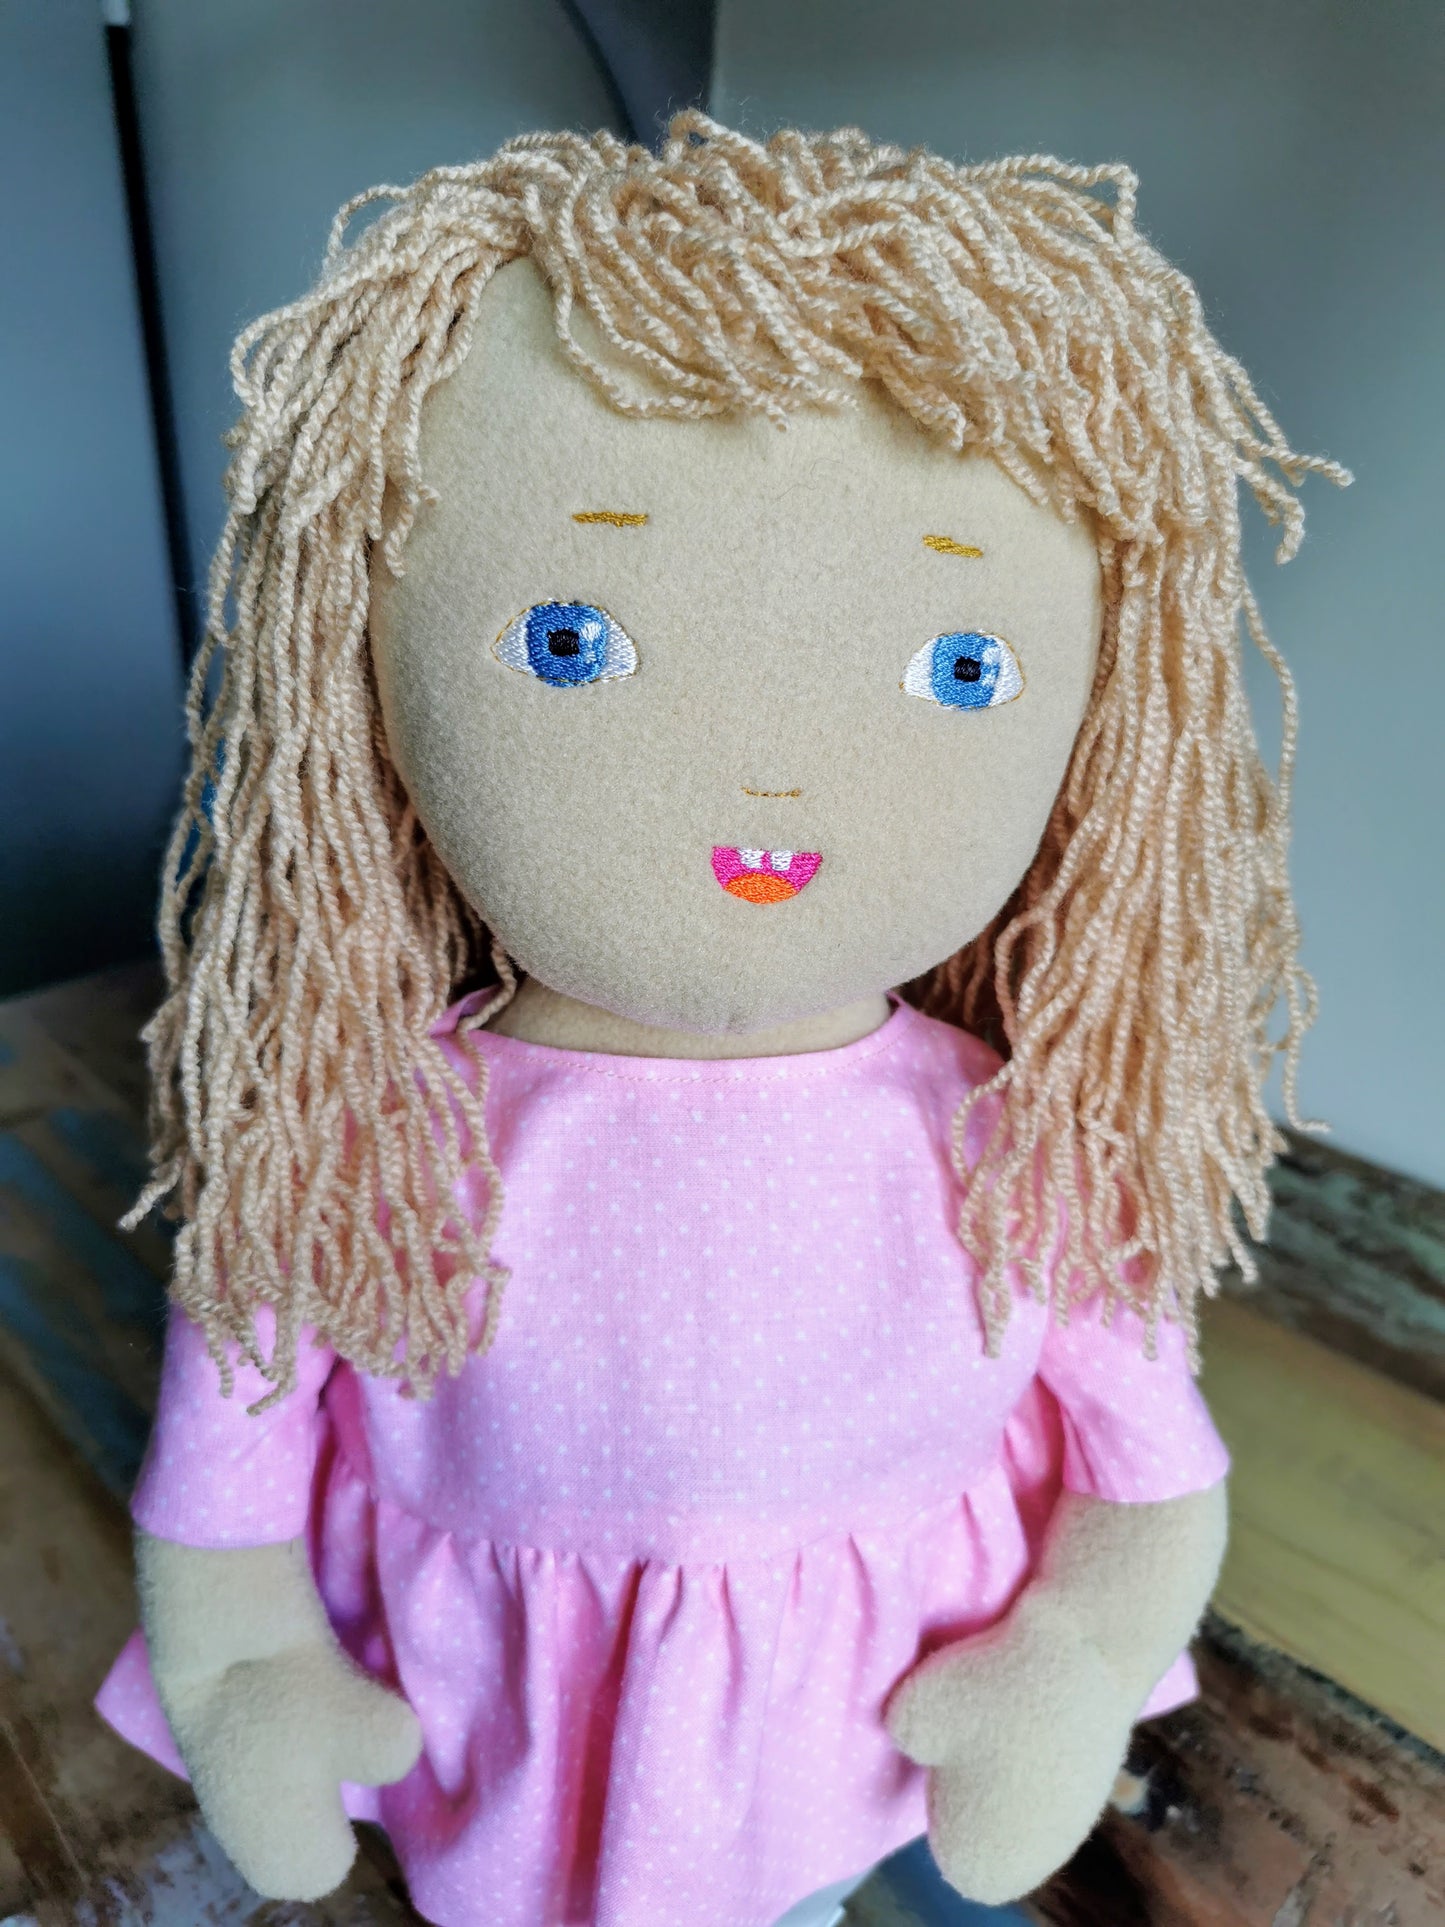 Custom Doll from Photo to Plush, custom dolls from photo, dolls of people, replica of people, plush selfie doll from photo, figurine mini-me